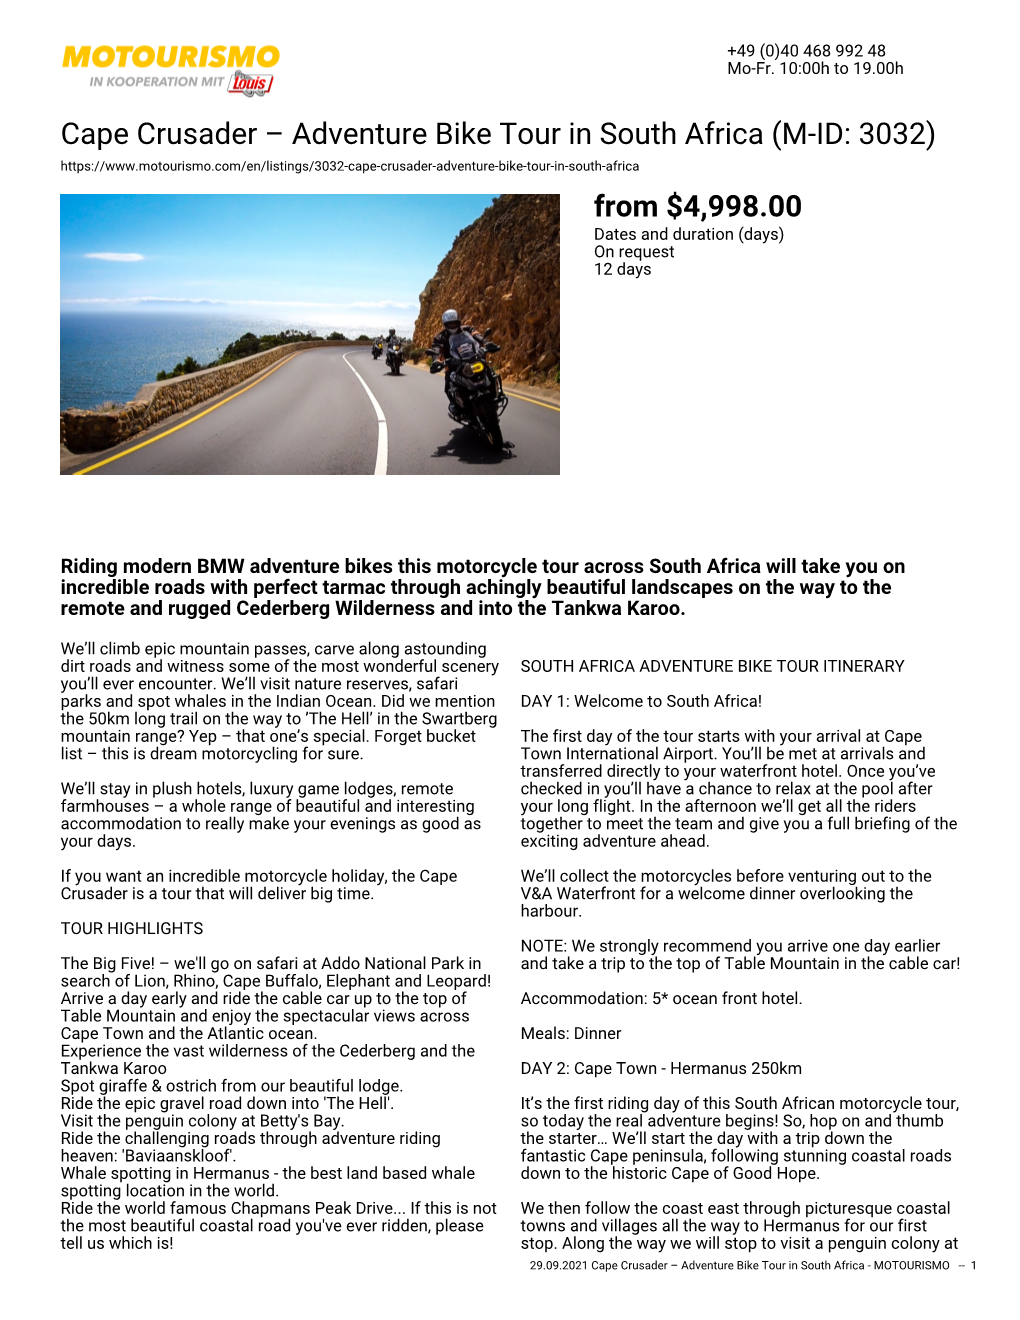 Cape Crusader – Adventure Bike Tour in South Africa (M-ID: 3032)